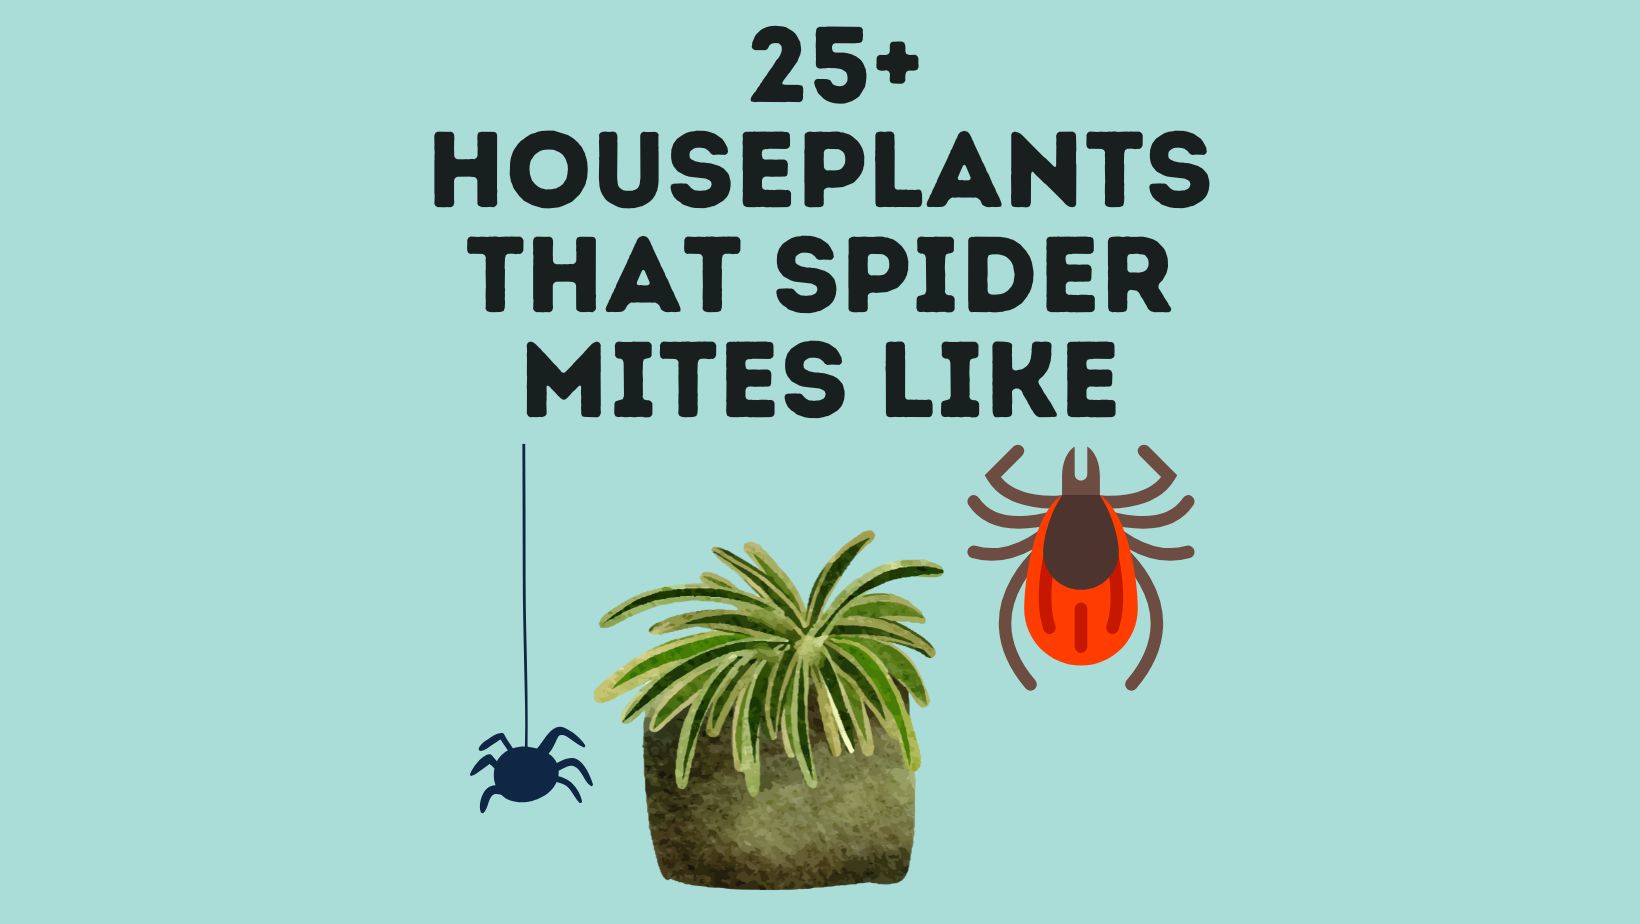 Houseplants That Spider Mites Like